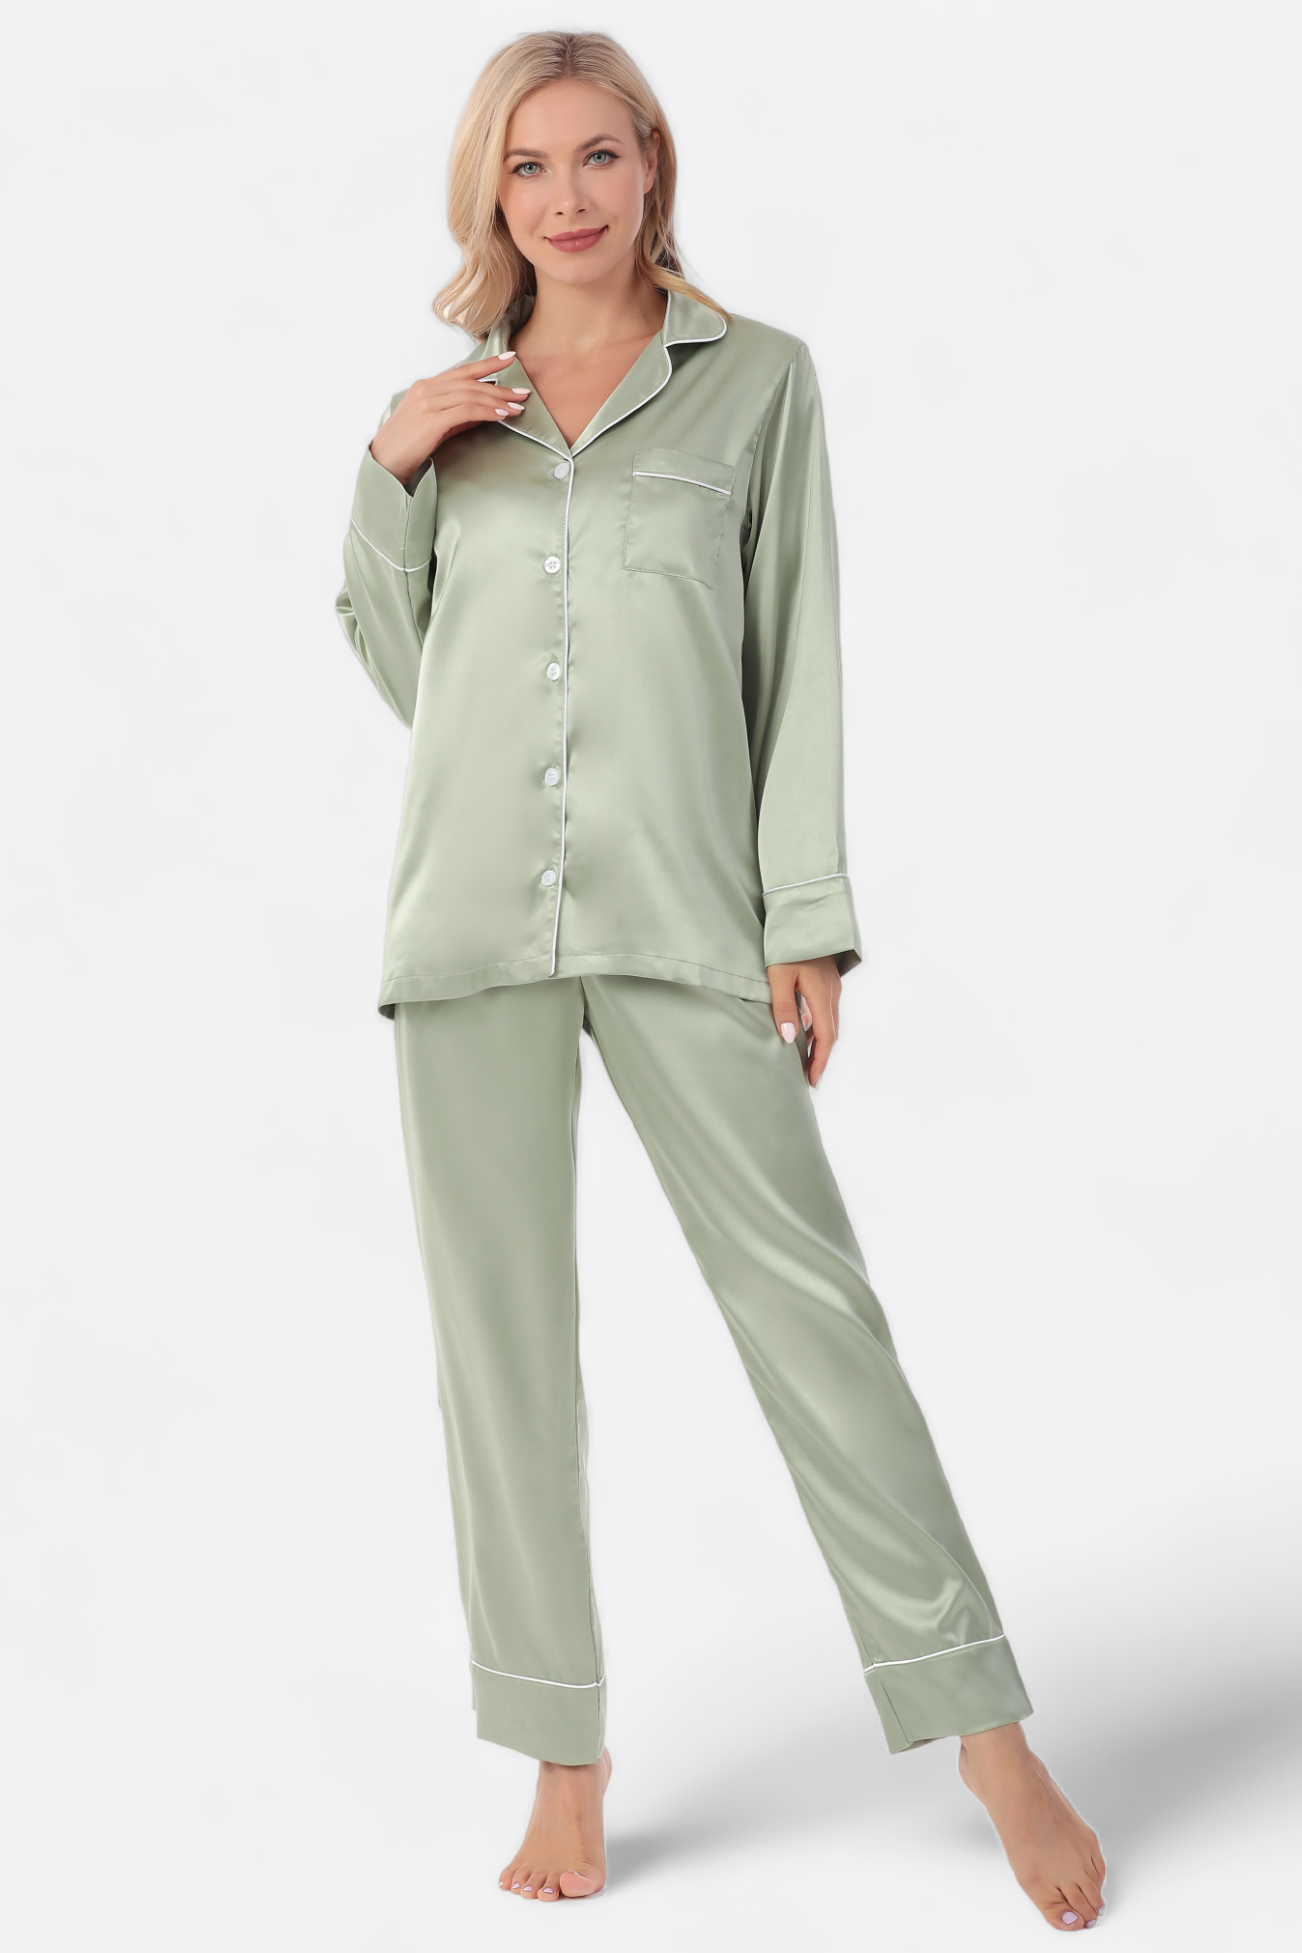 Women's Nightgown Satin Nightshirt Trim Sleepwear Button Down Nightdress  Silk Pajama - China Nightgown and Silk Felling price